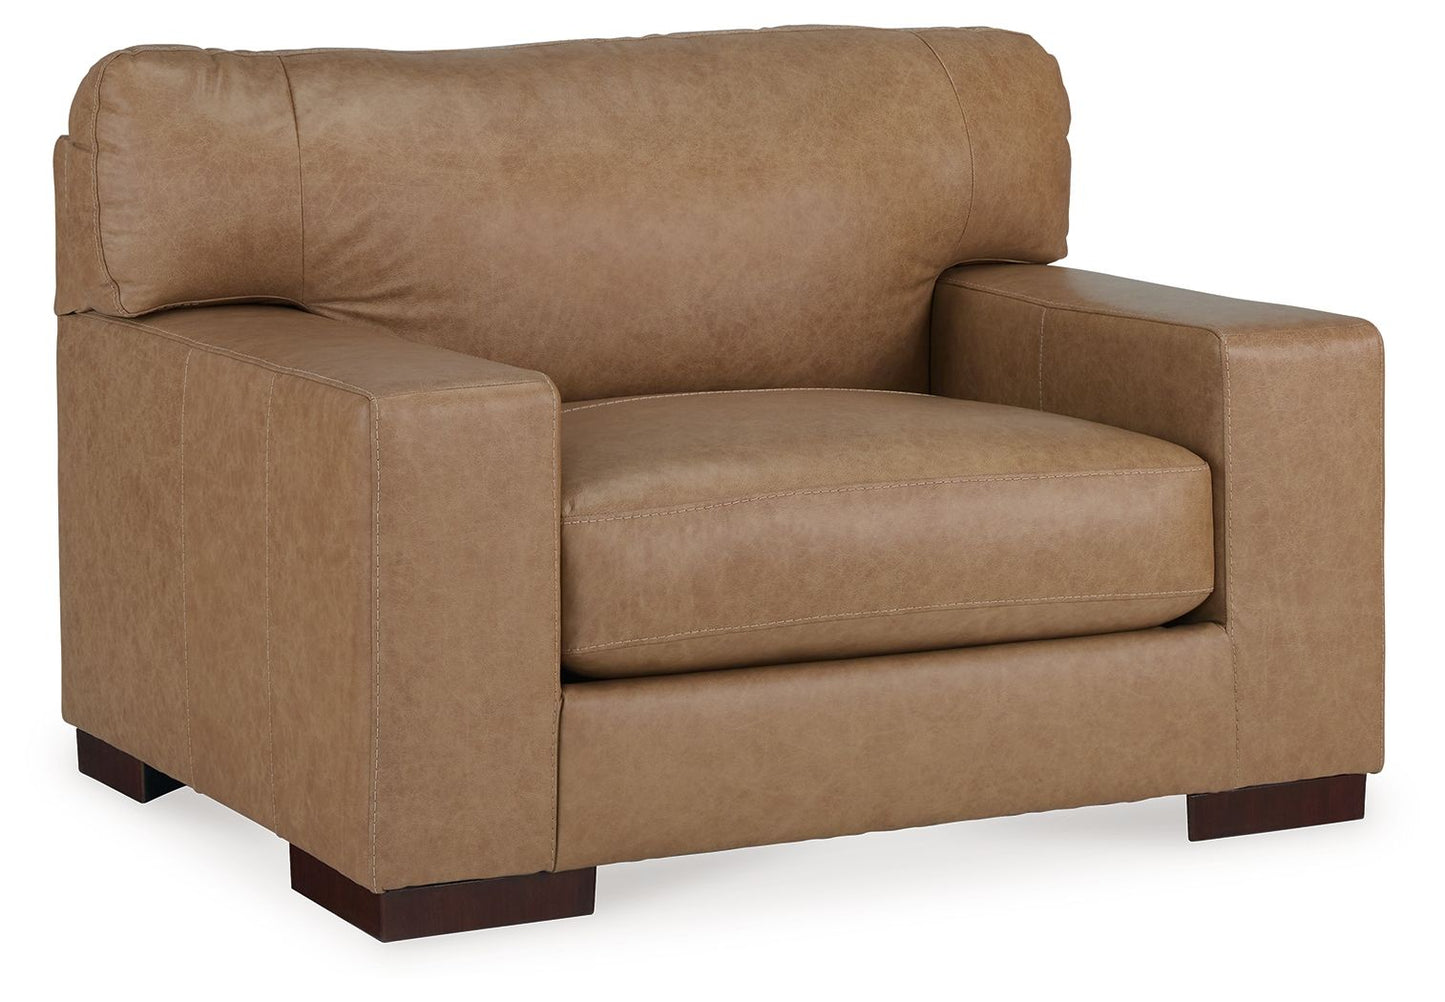 Lombardia - Tumbleweed - 4 Pc. - Sofa, Loveseat, Chair And A Half, Ottoman